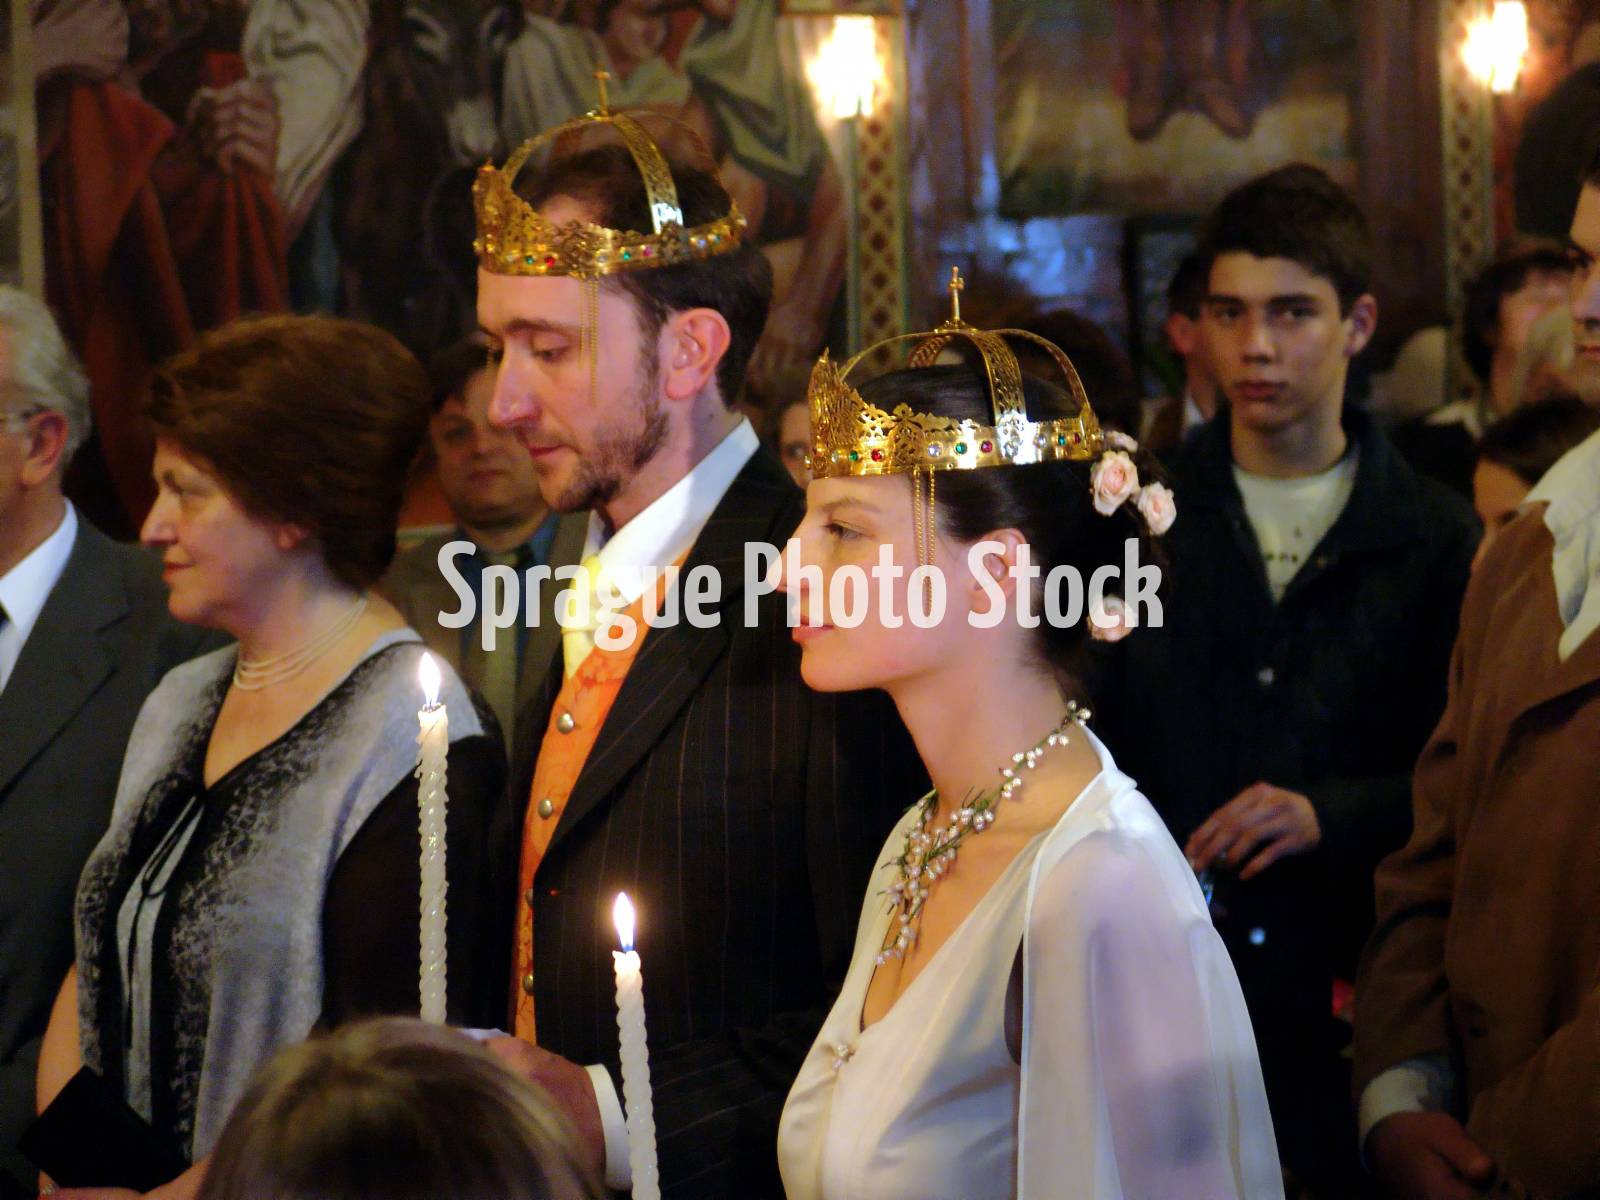 Wedding ceremony inside the Byzantine Catholic Assumption church, Sofia. Bulgaria.